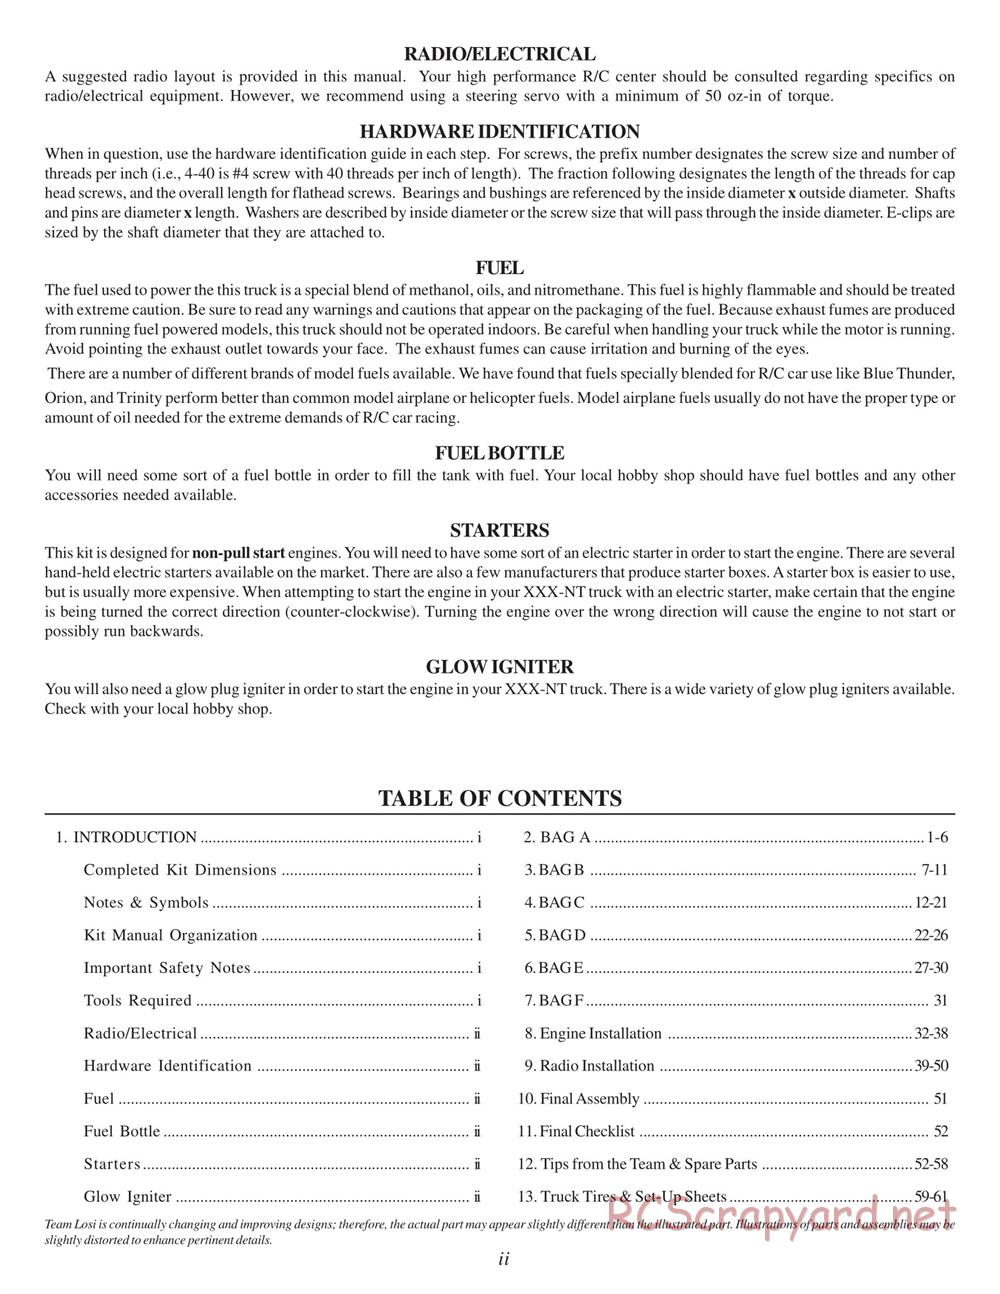 Team Losi - XXX-NT Adam Drake Edition - Manual - Page 3